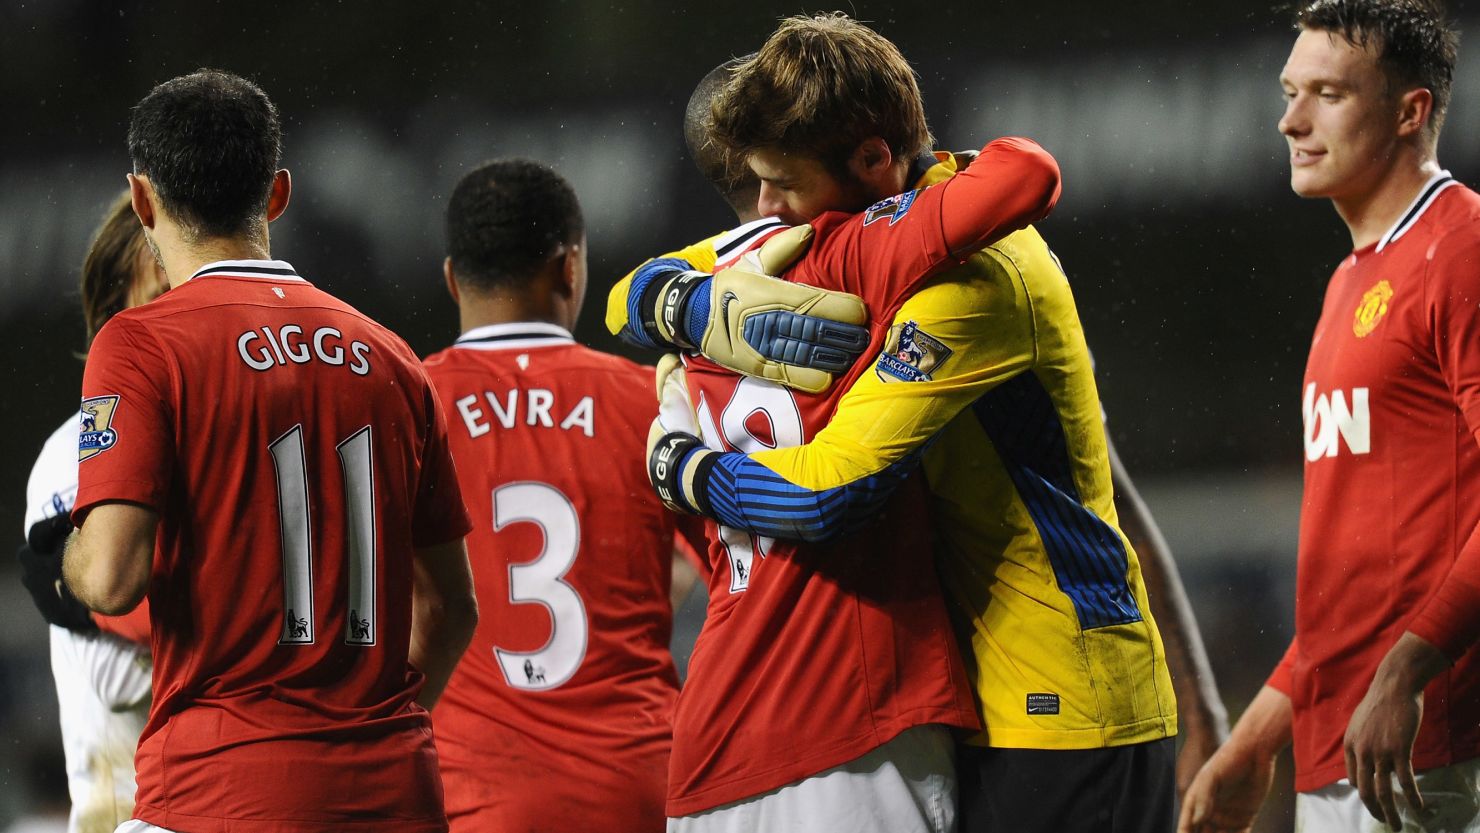 Manchester United's Ashley is congratulated by goalkeeper David de Gea after his match-winning brace.